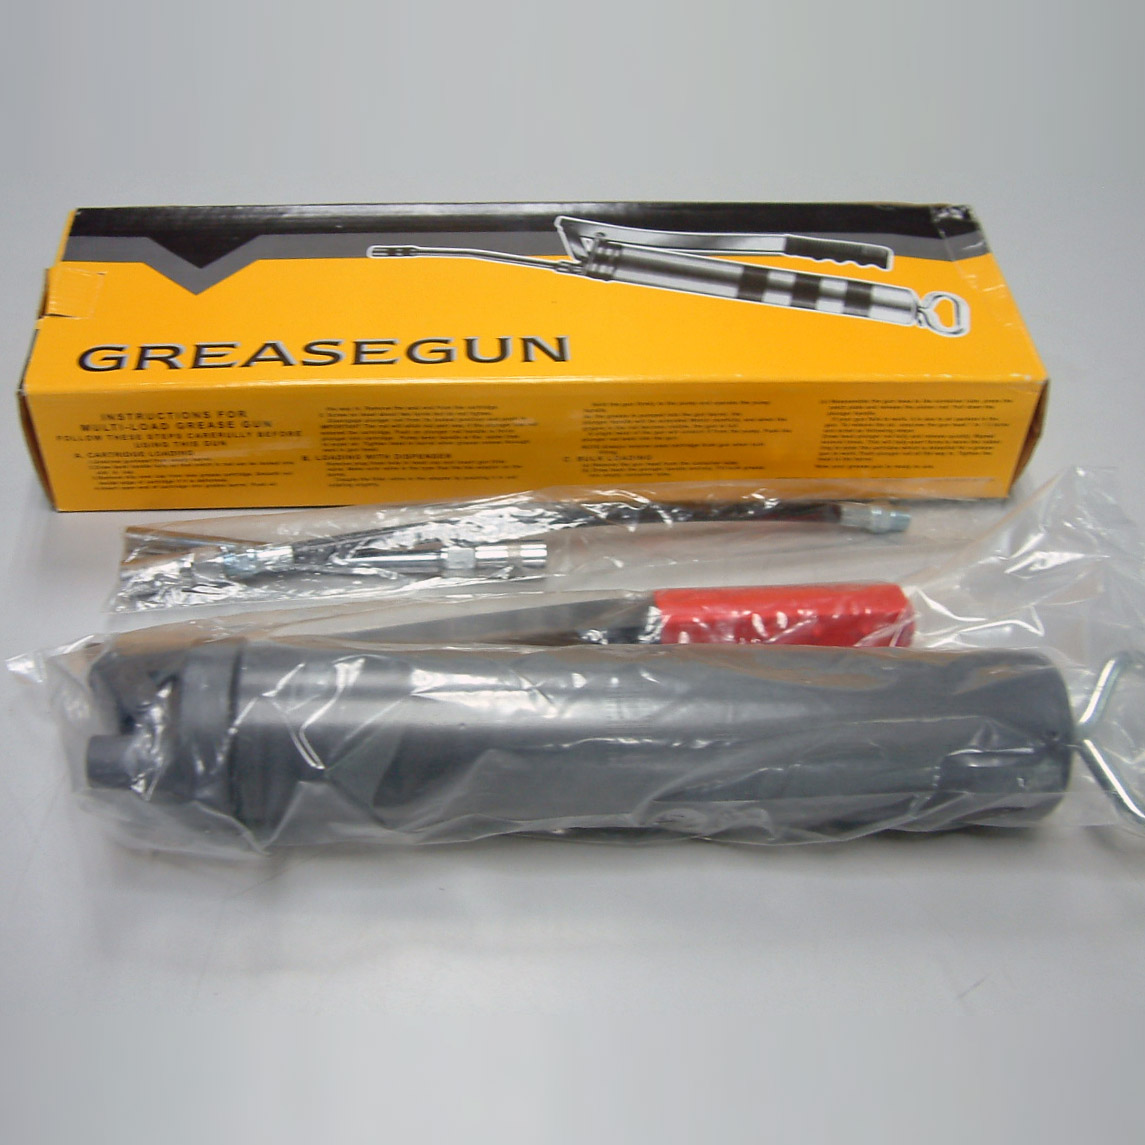 Grease Gun GG500D02